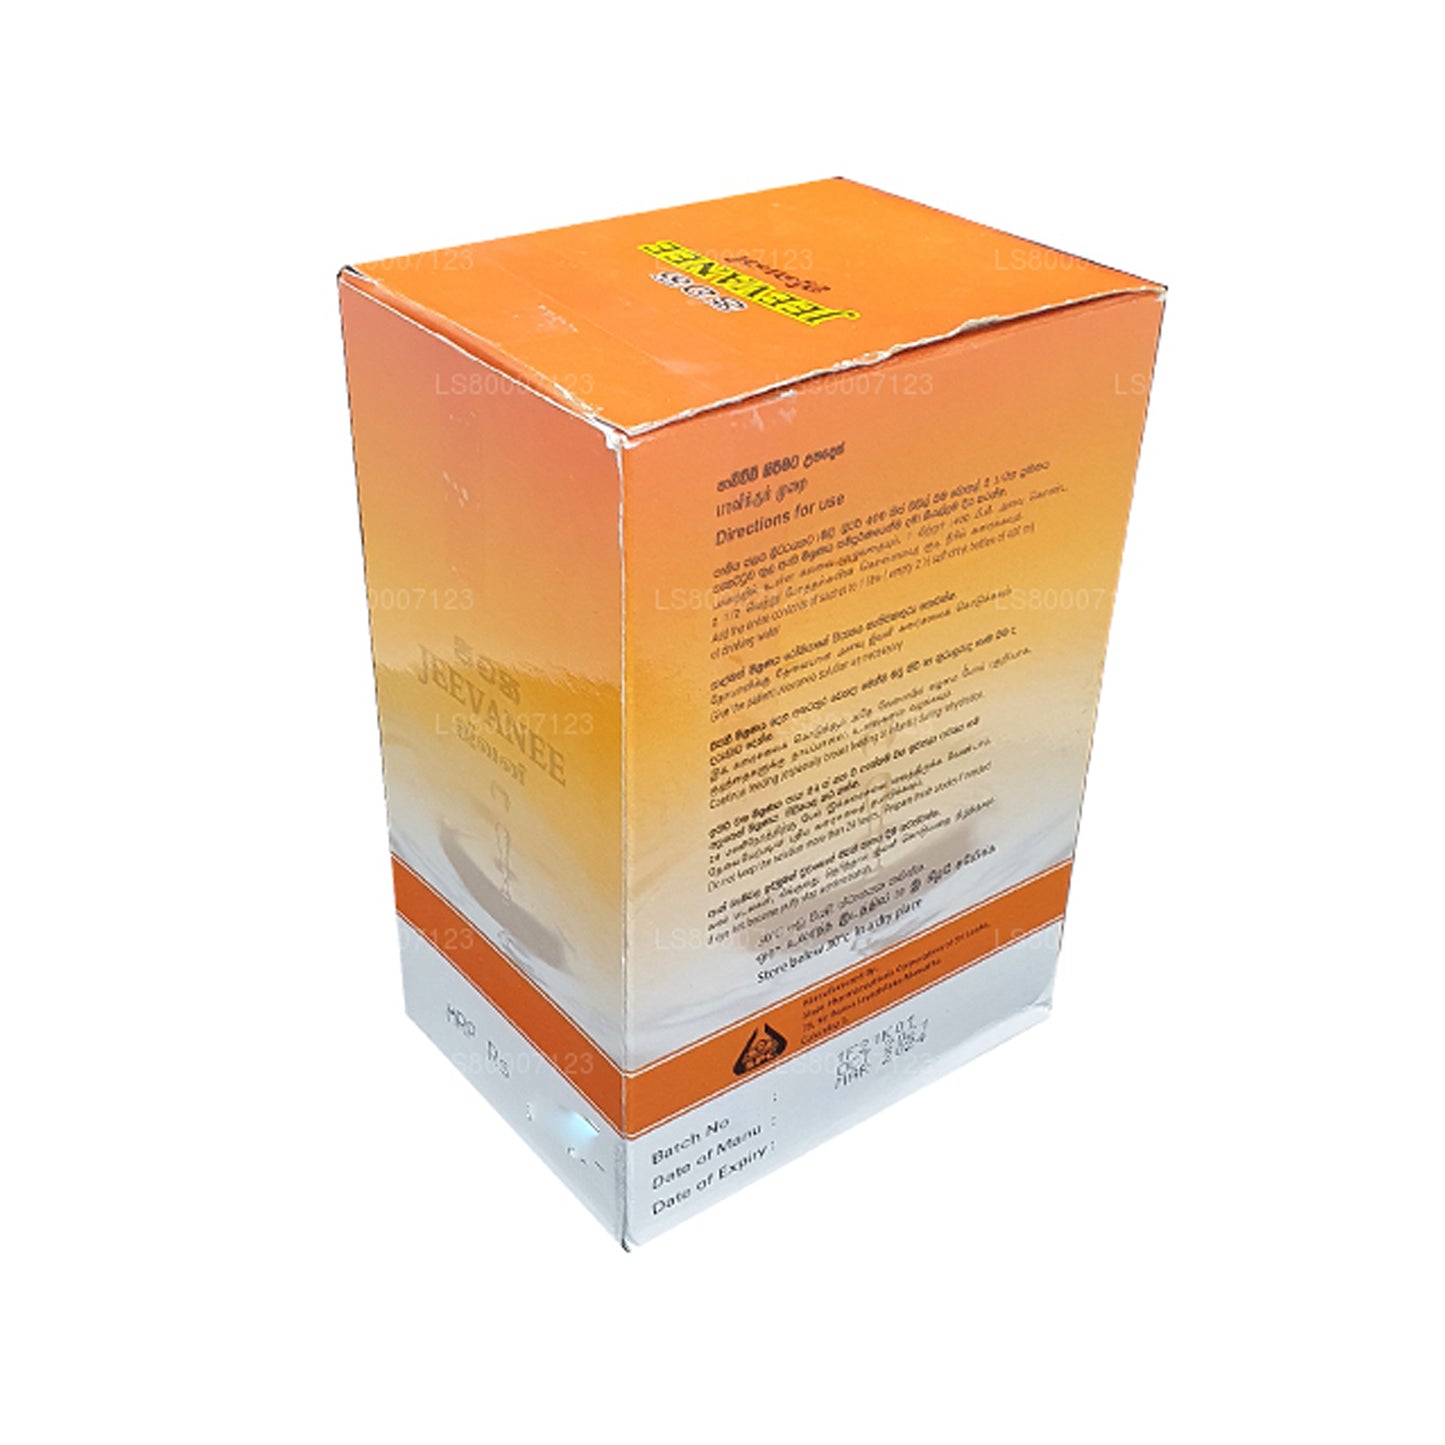 Jeevanee Orange Flavoured Oral Rehydration Salts (25 Sachets)